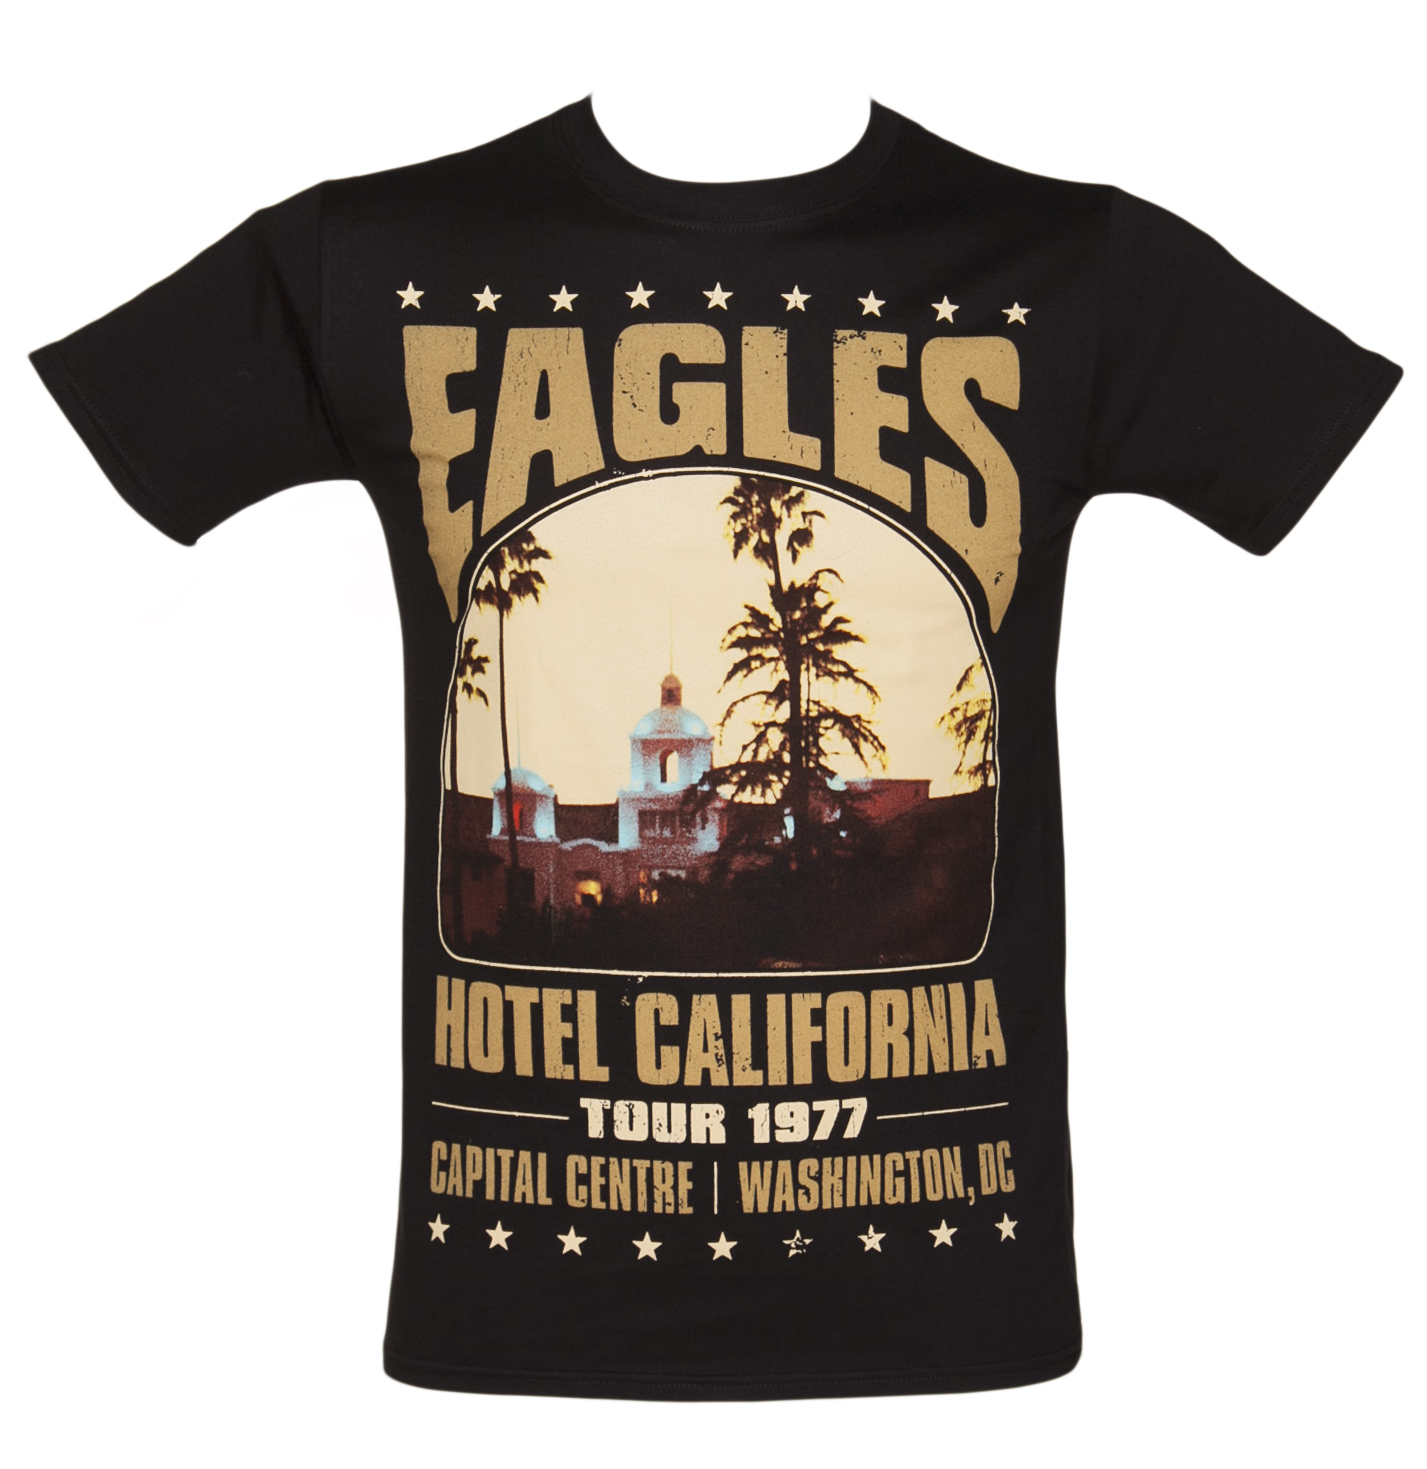 Hotel California Tour The Eagles T-Shirt